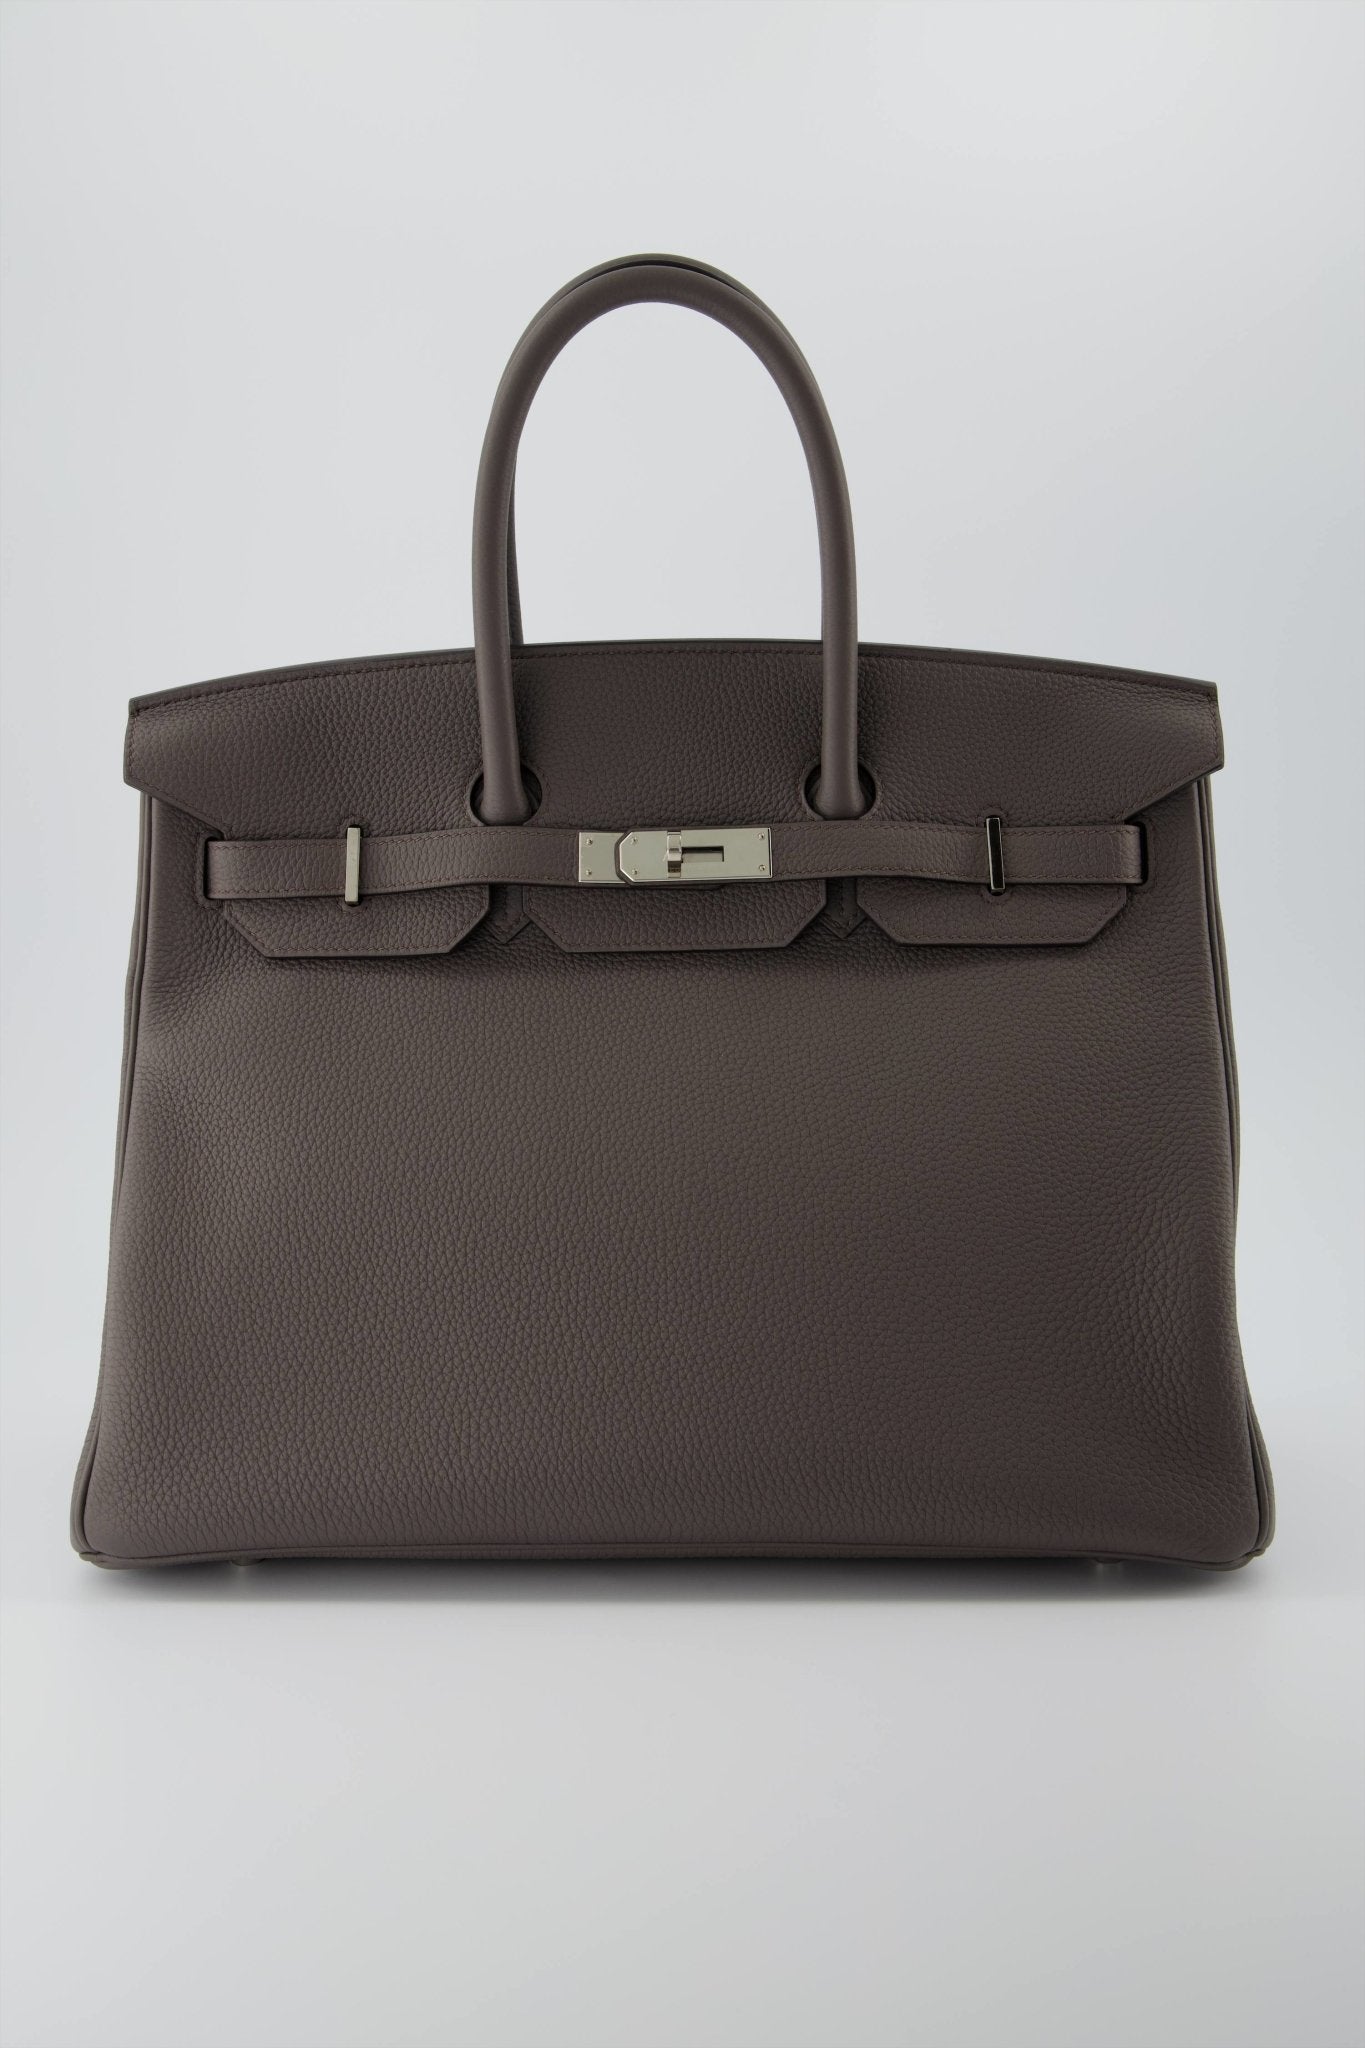 HERMES Birkin 30 hand bag D Togo leather Gray Etain GHW Used